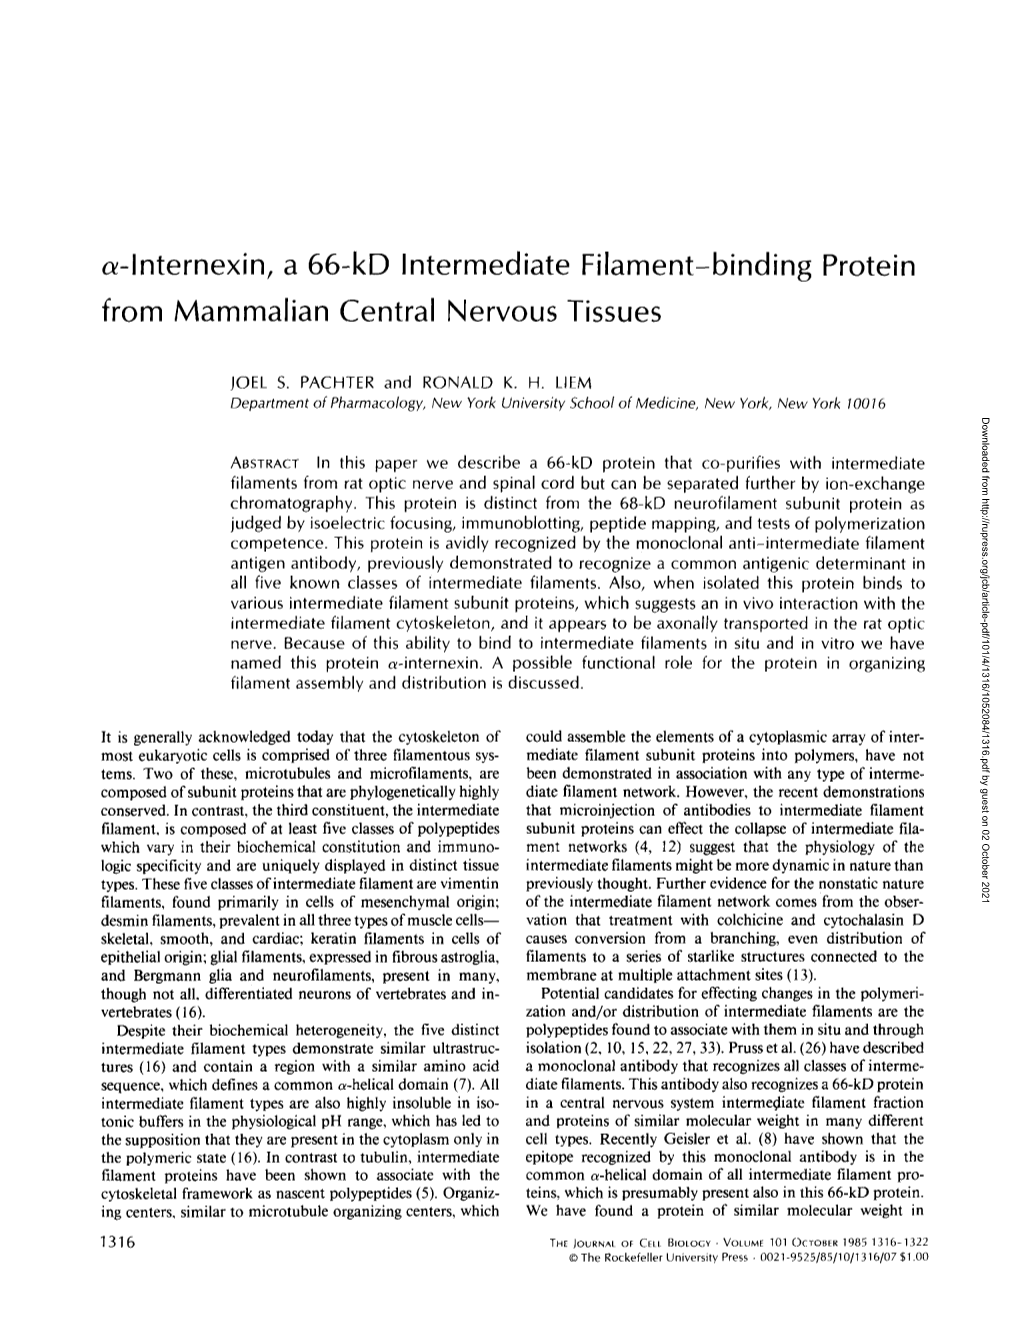 A-Lnternexin, a 66-Kd Intermediate Filament-Binding Protein from Mammalian Central Nervous Tissues